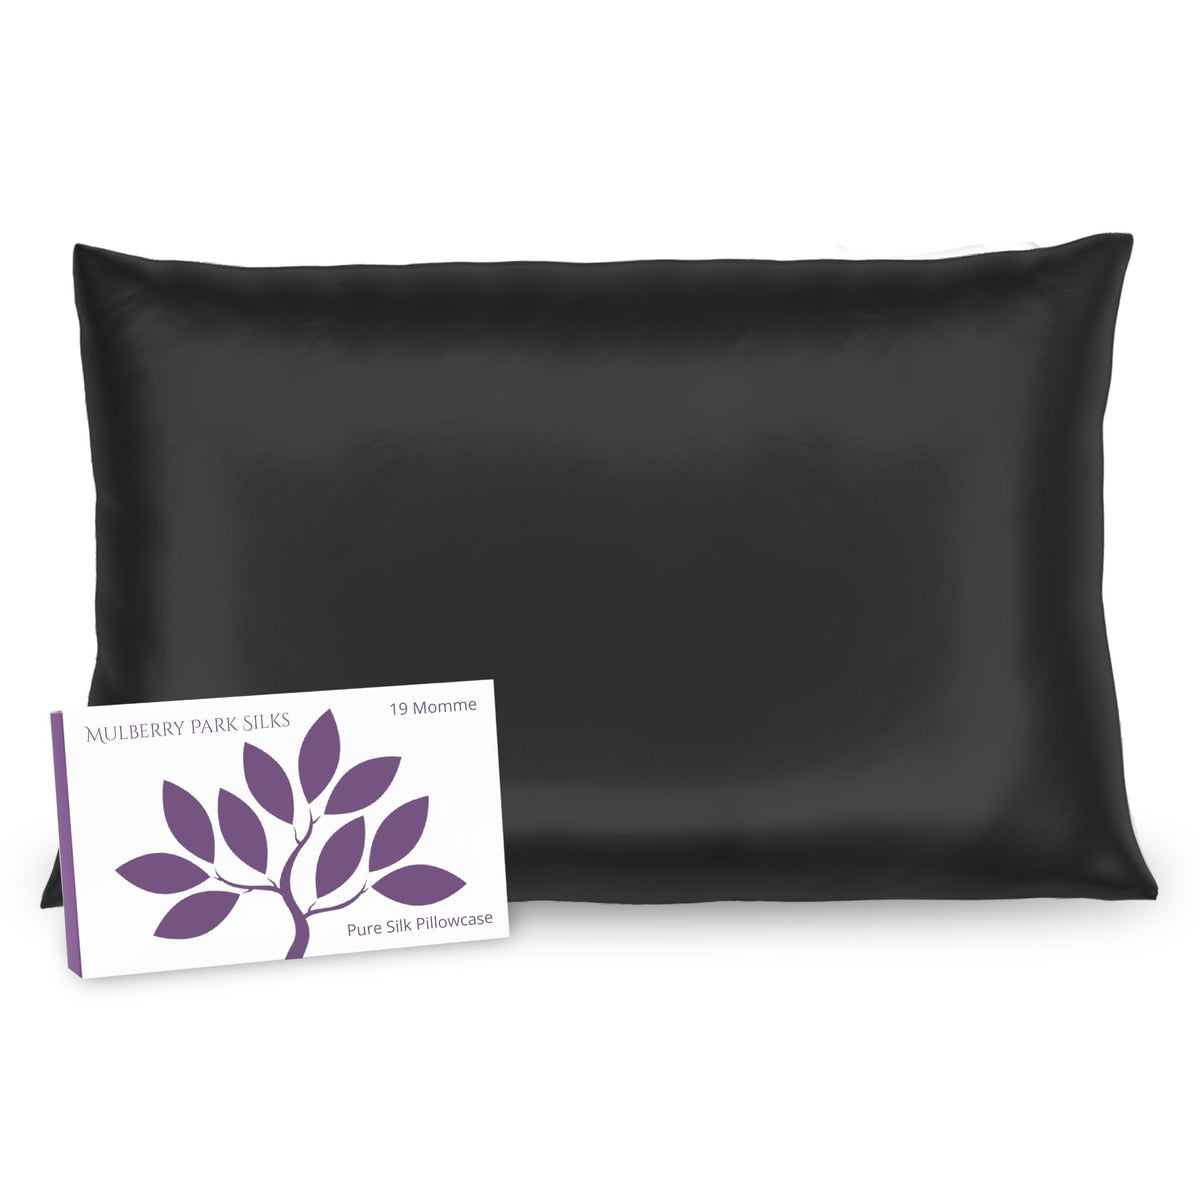 Hidden Zipper of Mulberry Park Silks Deluxe 19 Momme Pure Silk Pillowcase in Black Color